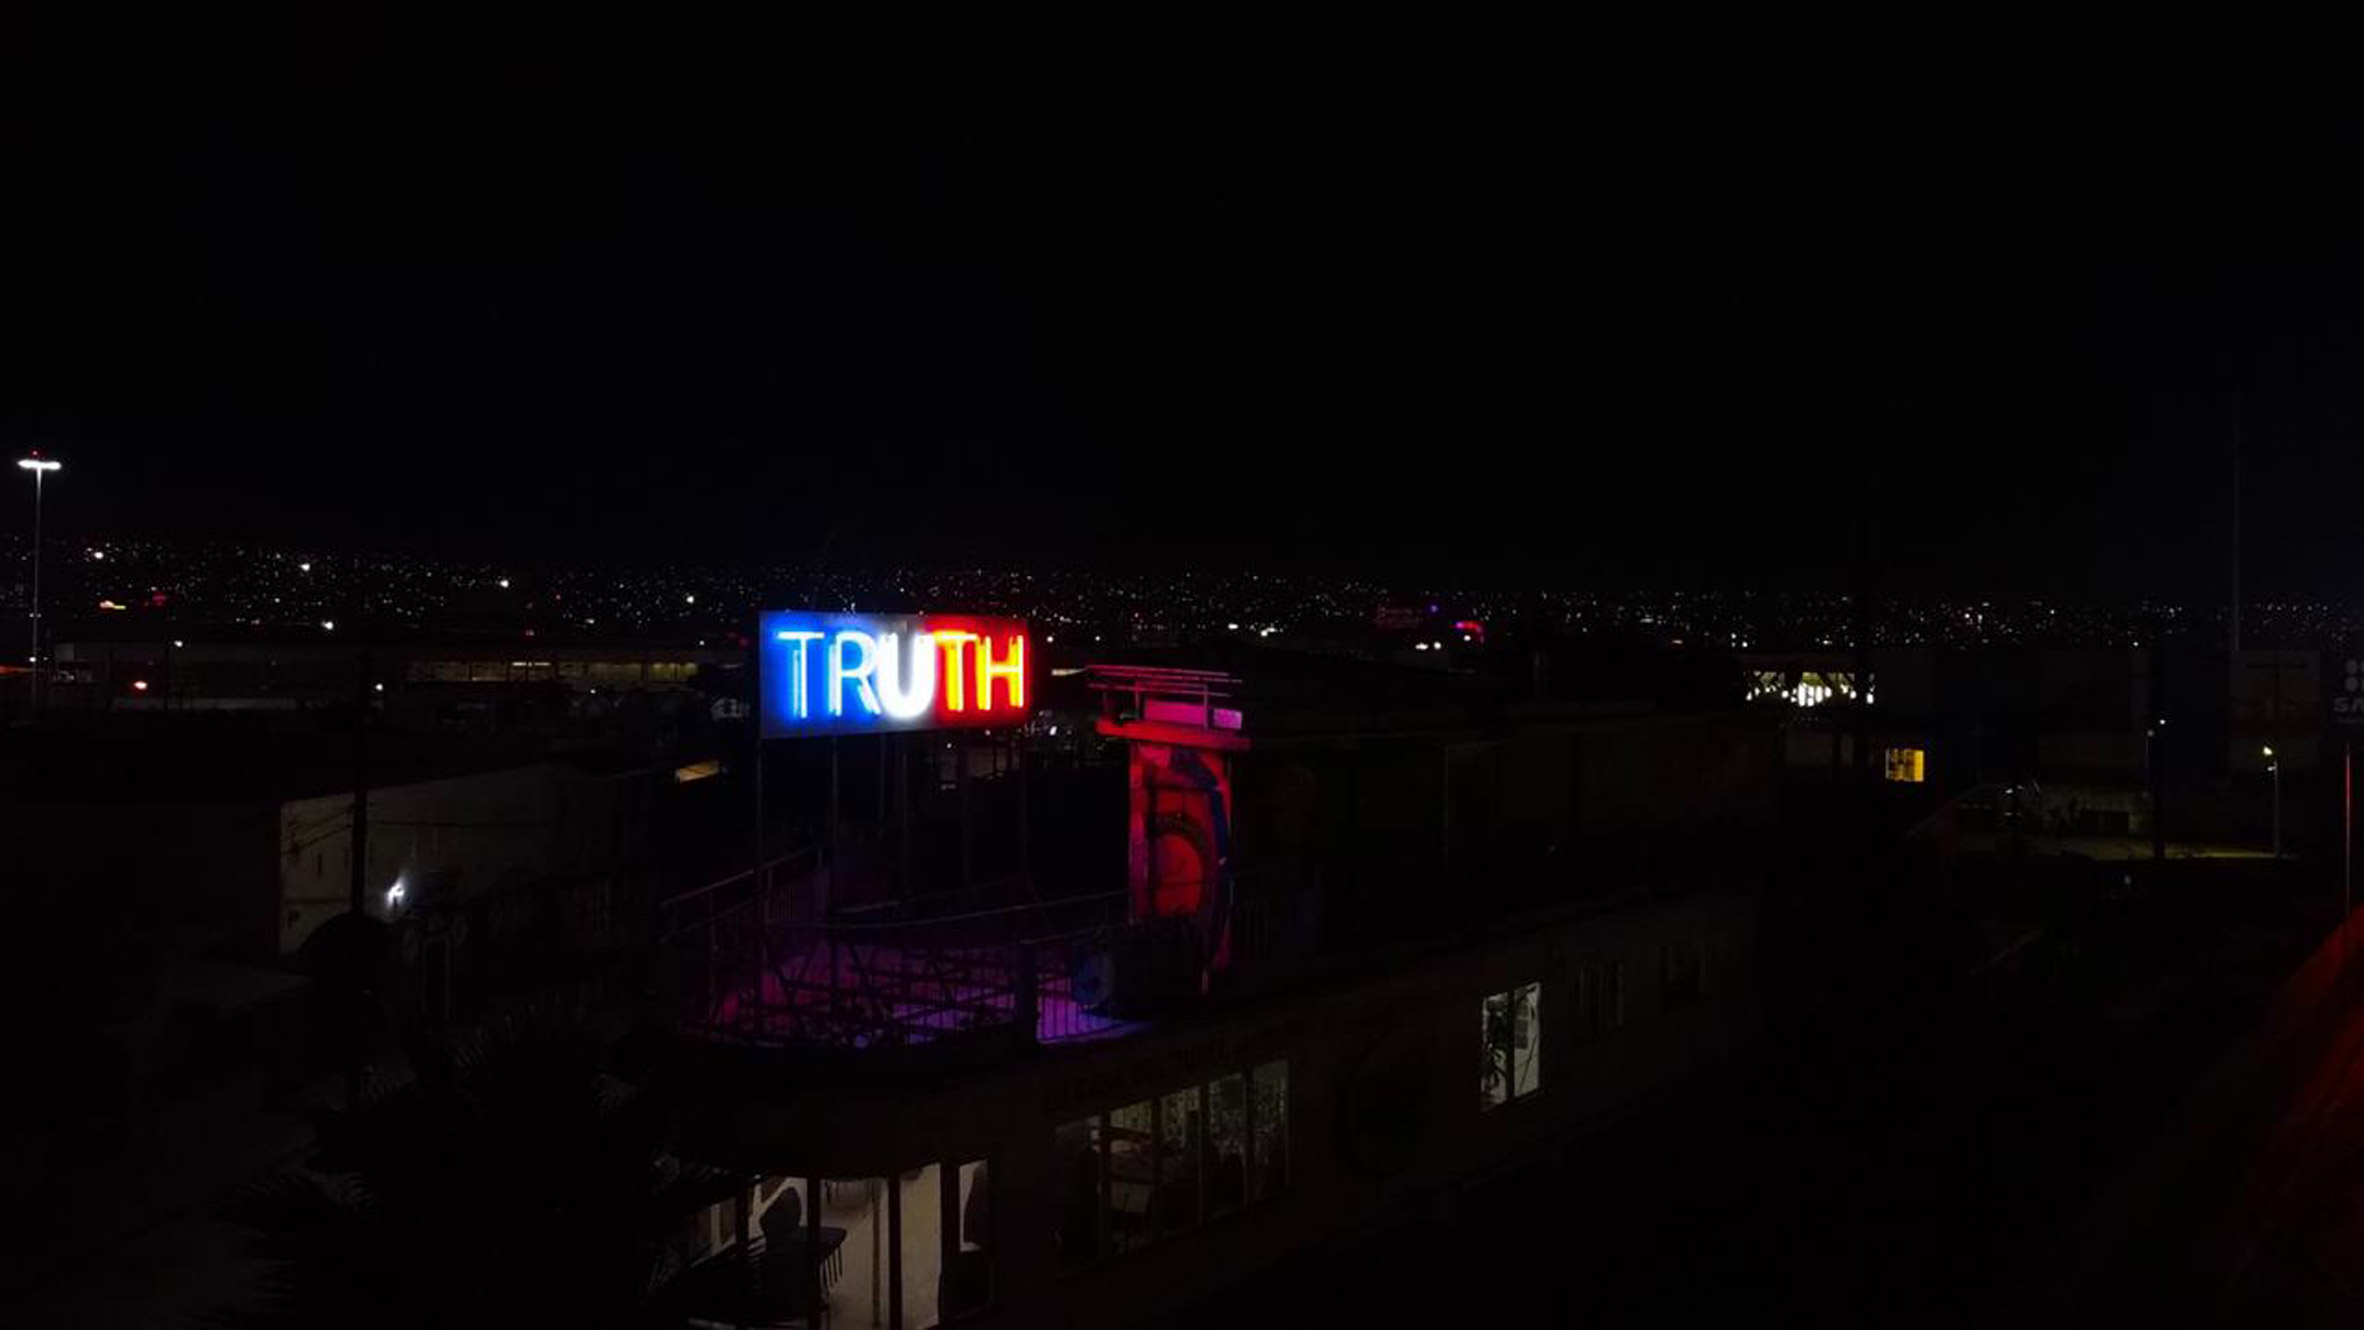 TRUTH/LIE neon lights by Stefan Brüggemann colours of the American flag